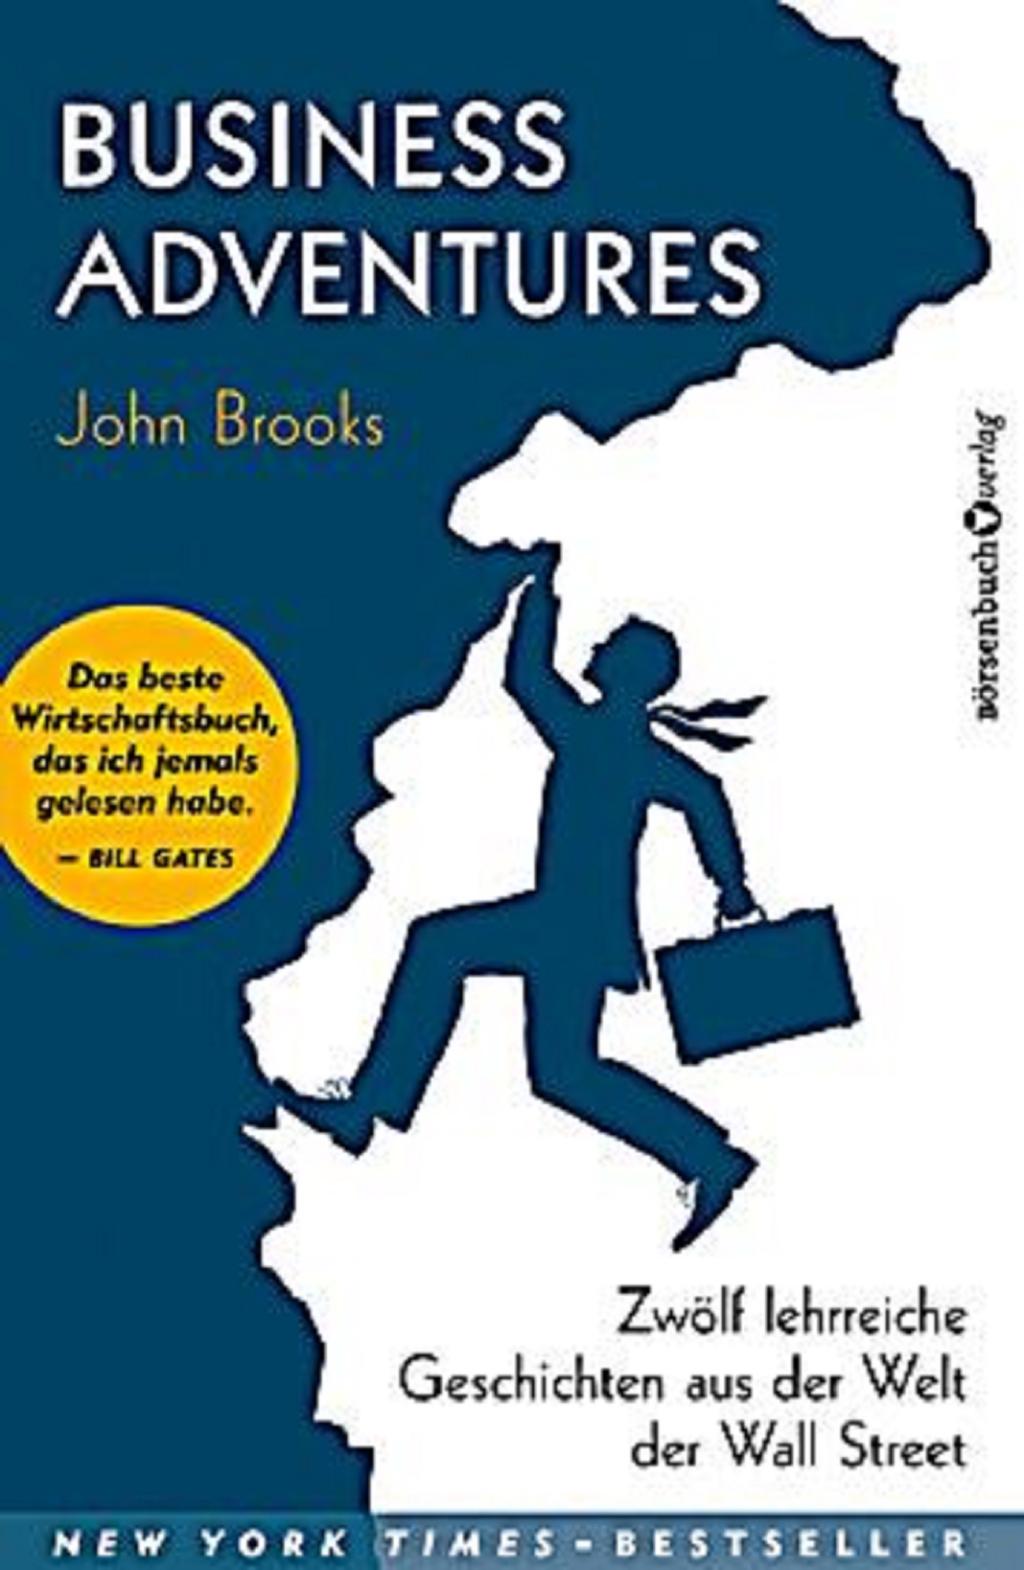 ماجراهای کسب و کار(Business Adventures)- جان بروکس